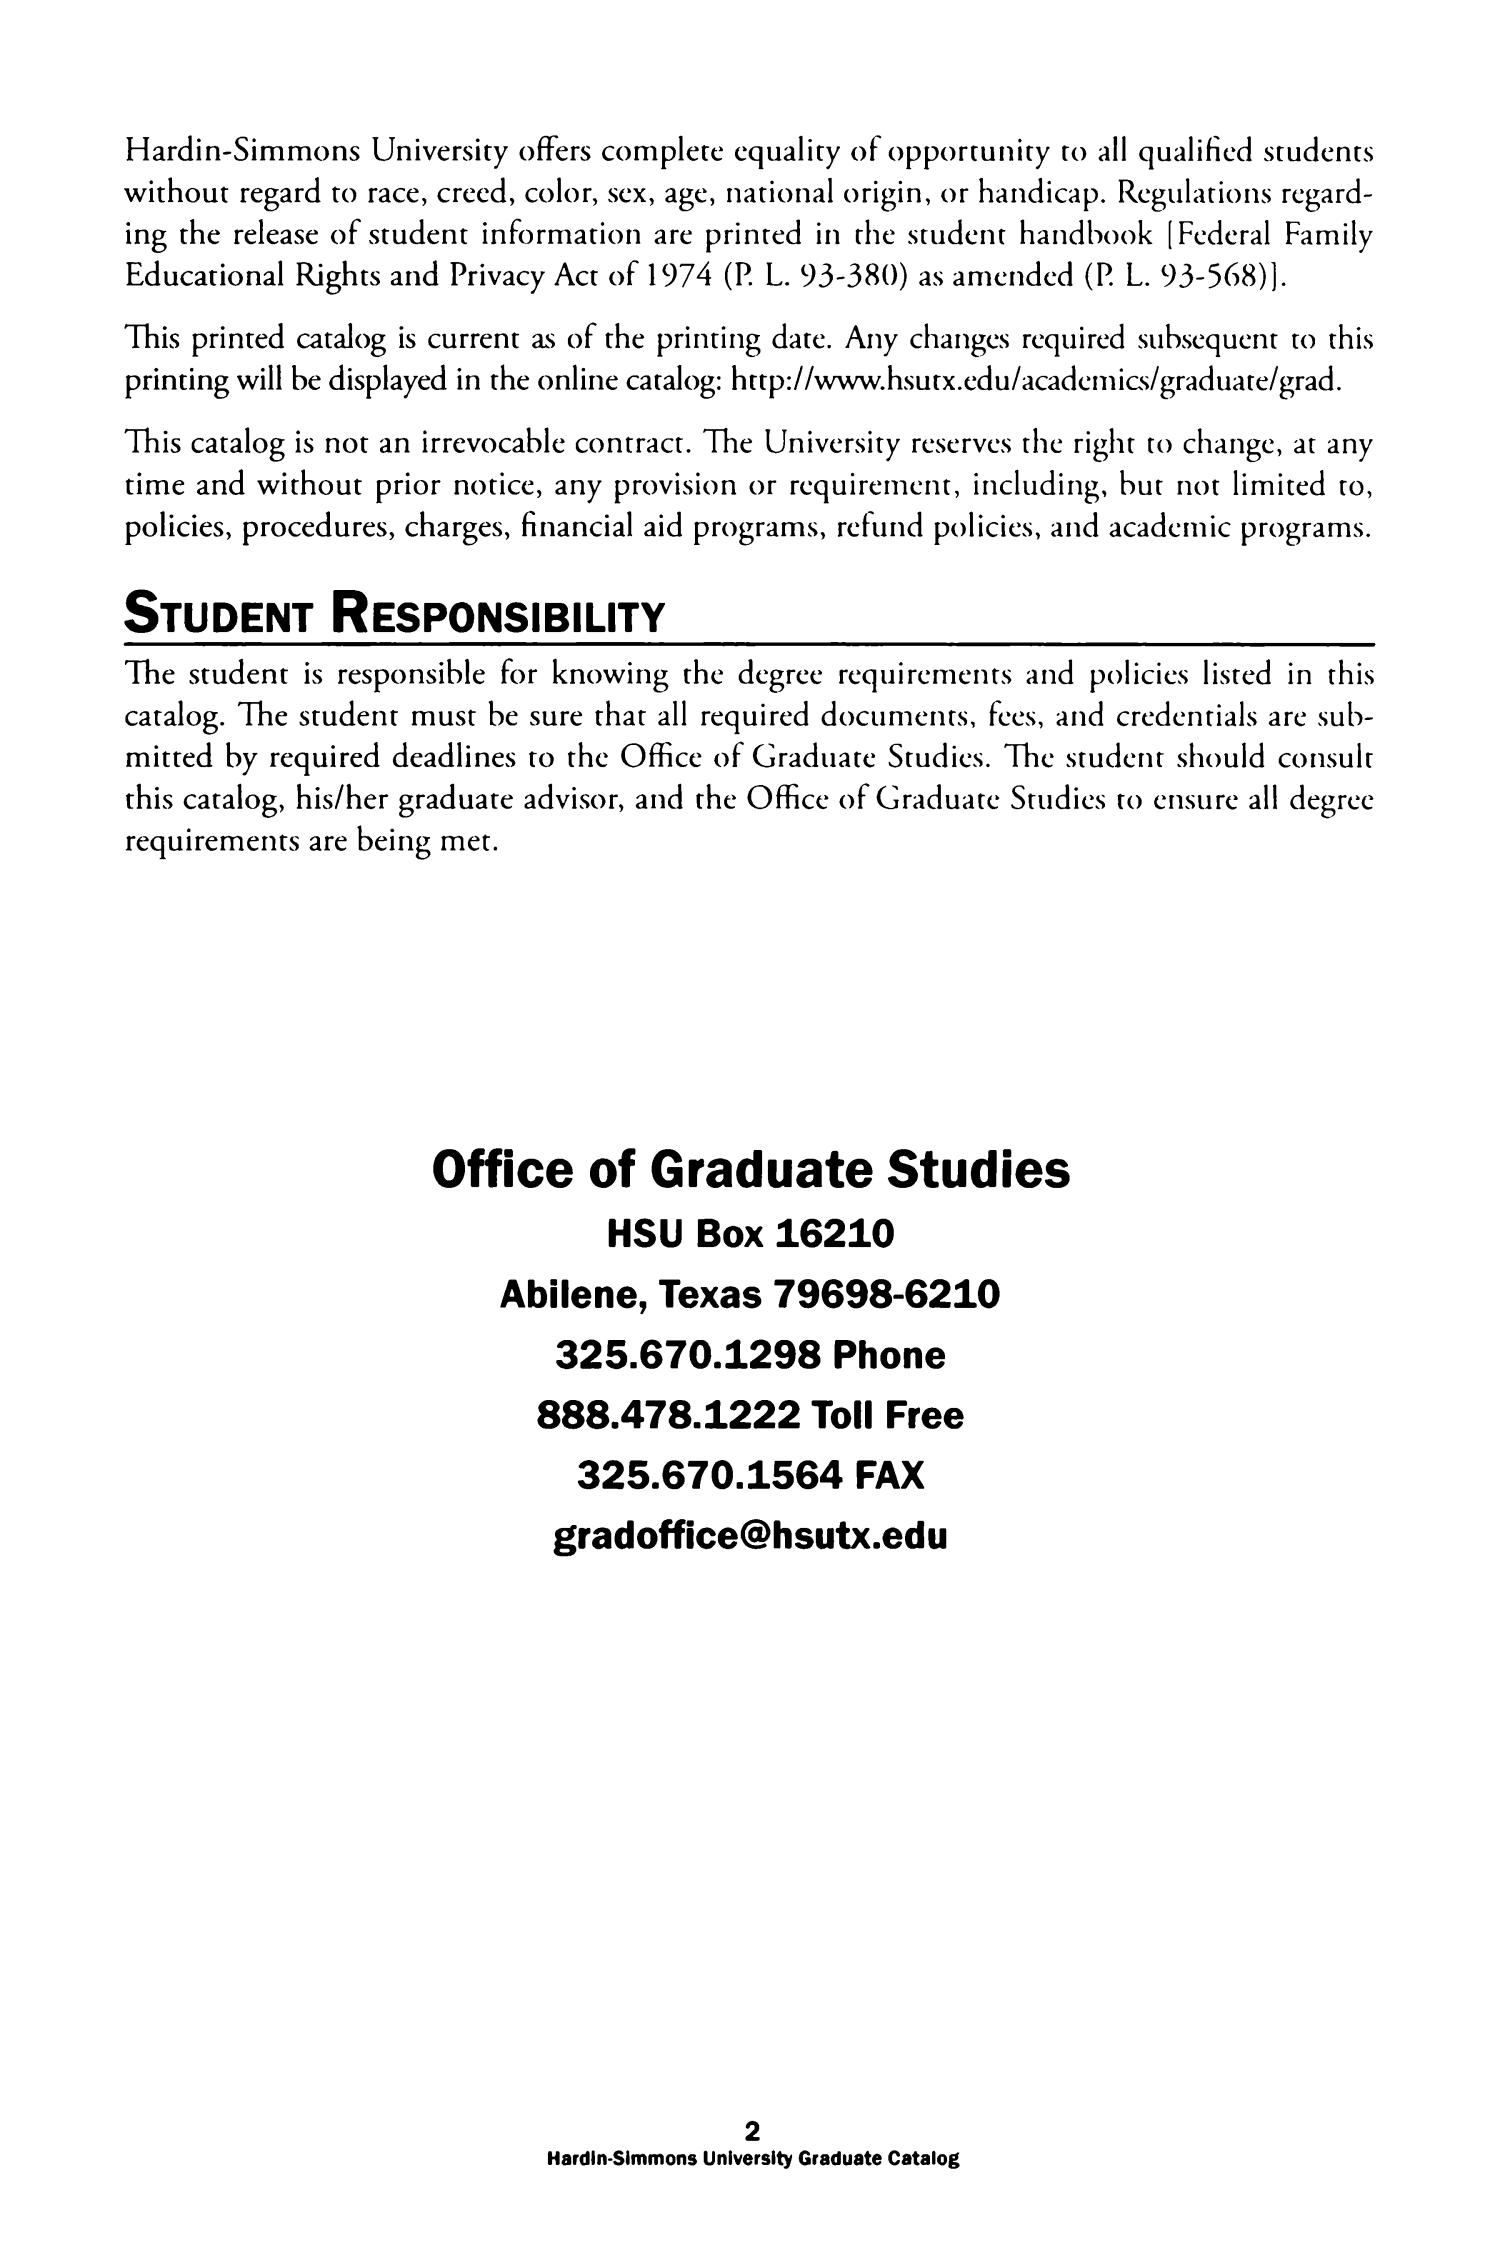 Catalog of Hardin-Simmons University, 2009-2010 Graduate Bulletin
                                                
                                                    2
                                                